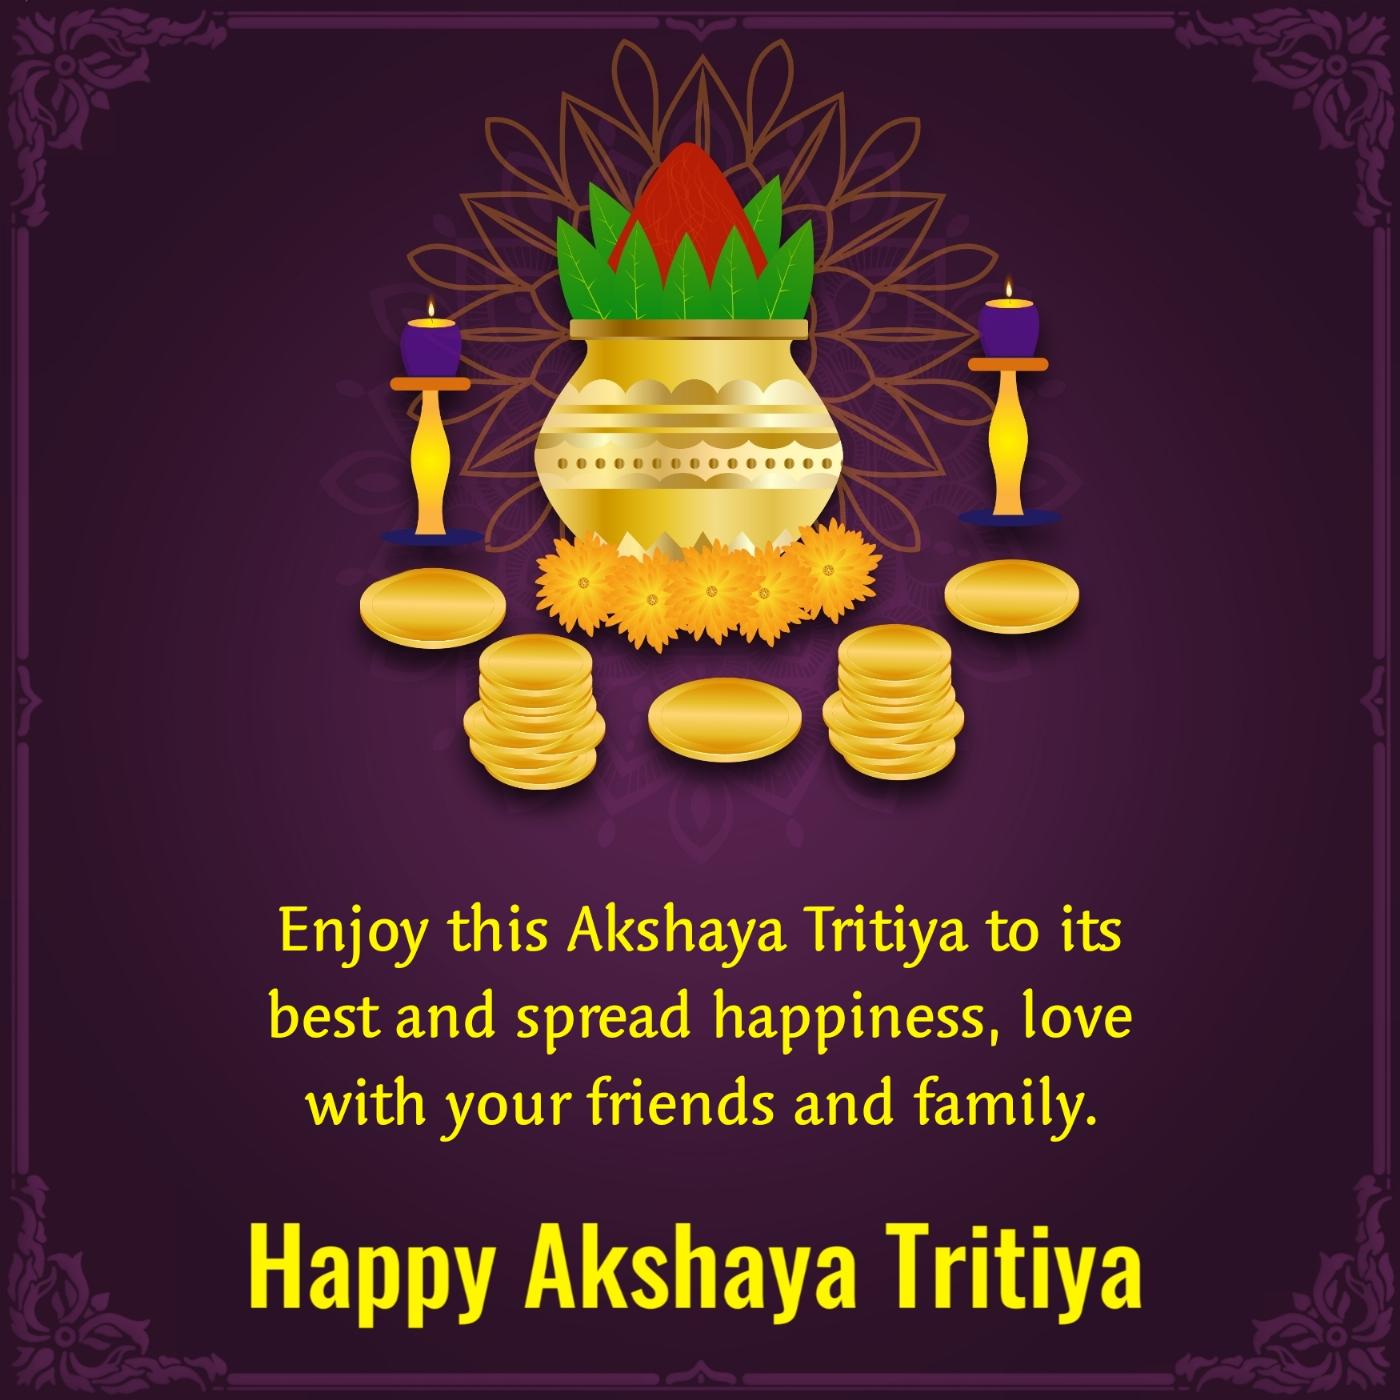 Enjoy this Akshaya Tritiya to its best and spread happiness